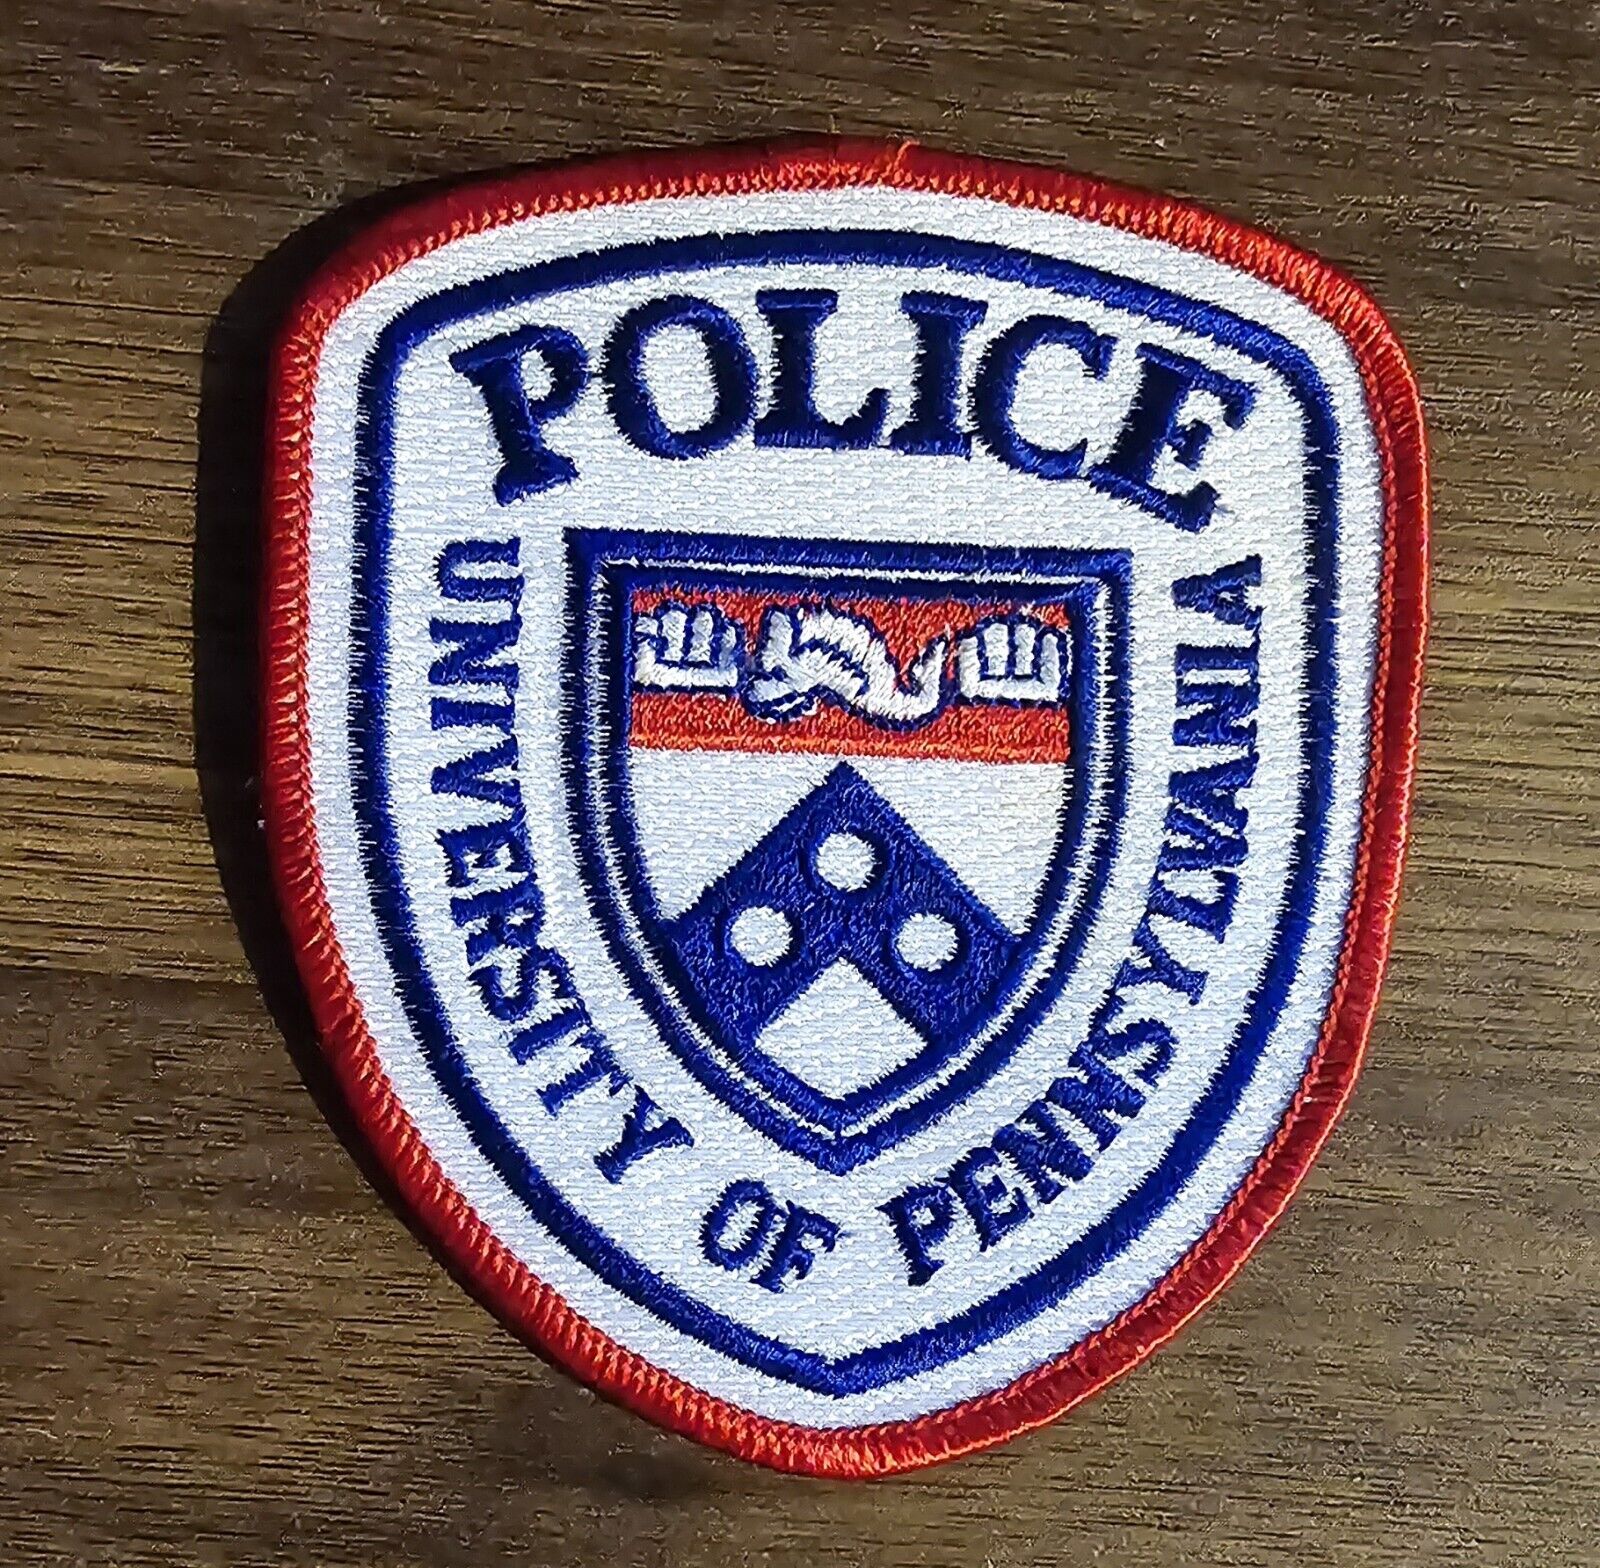 UNIVERSITY OF PENNSYLVANIA CAMPUS POLICE PATCH Philadelphia 